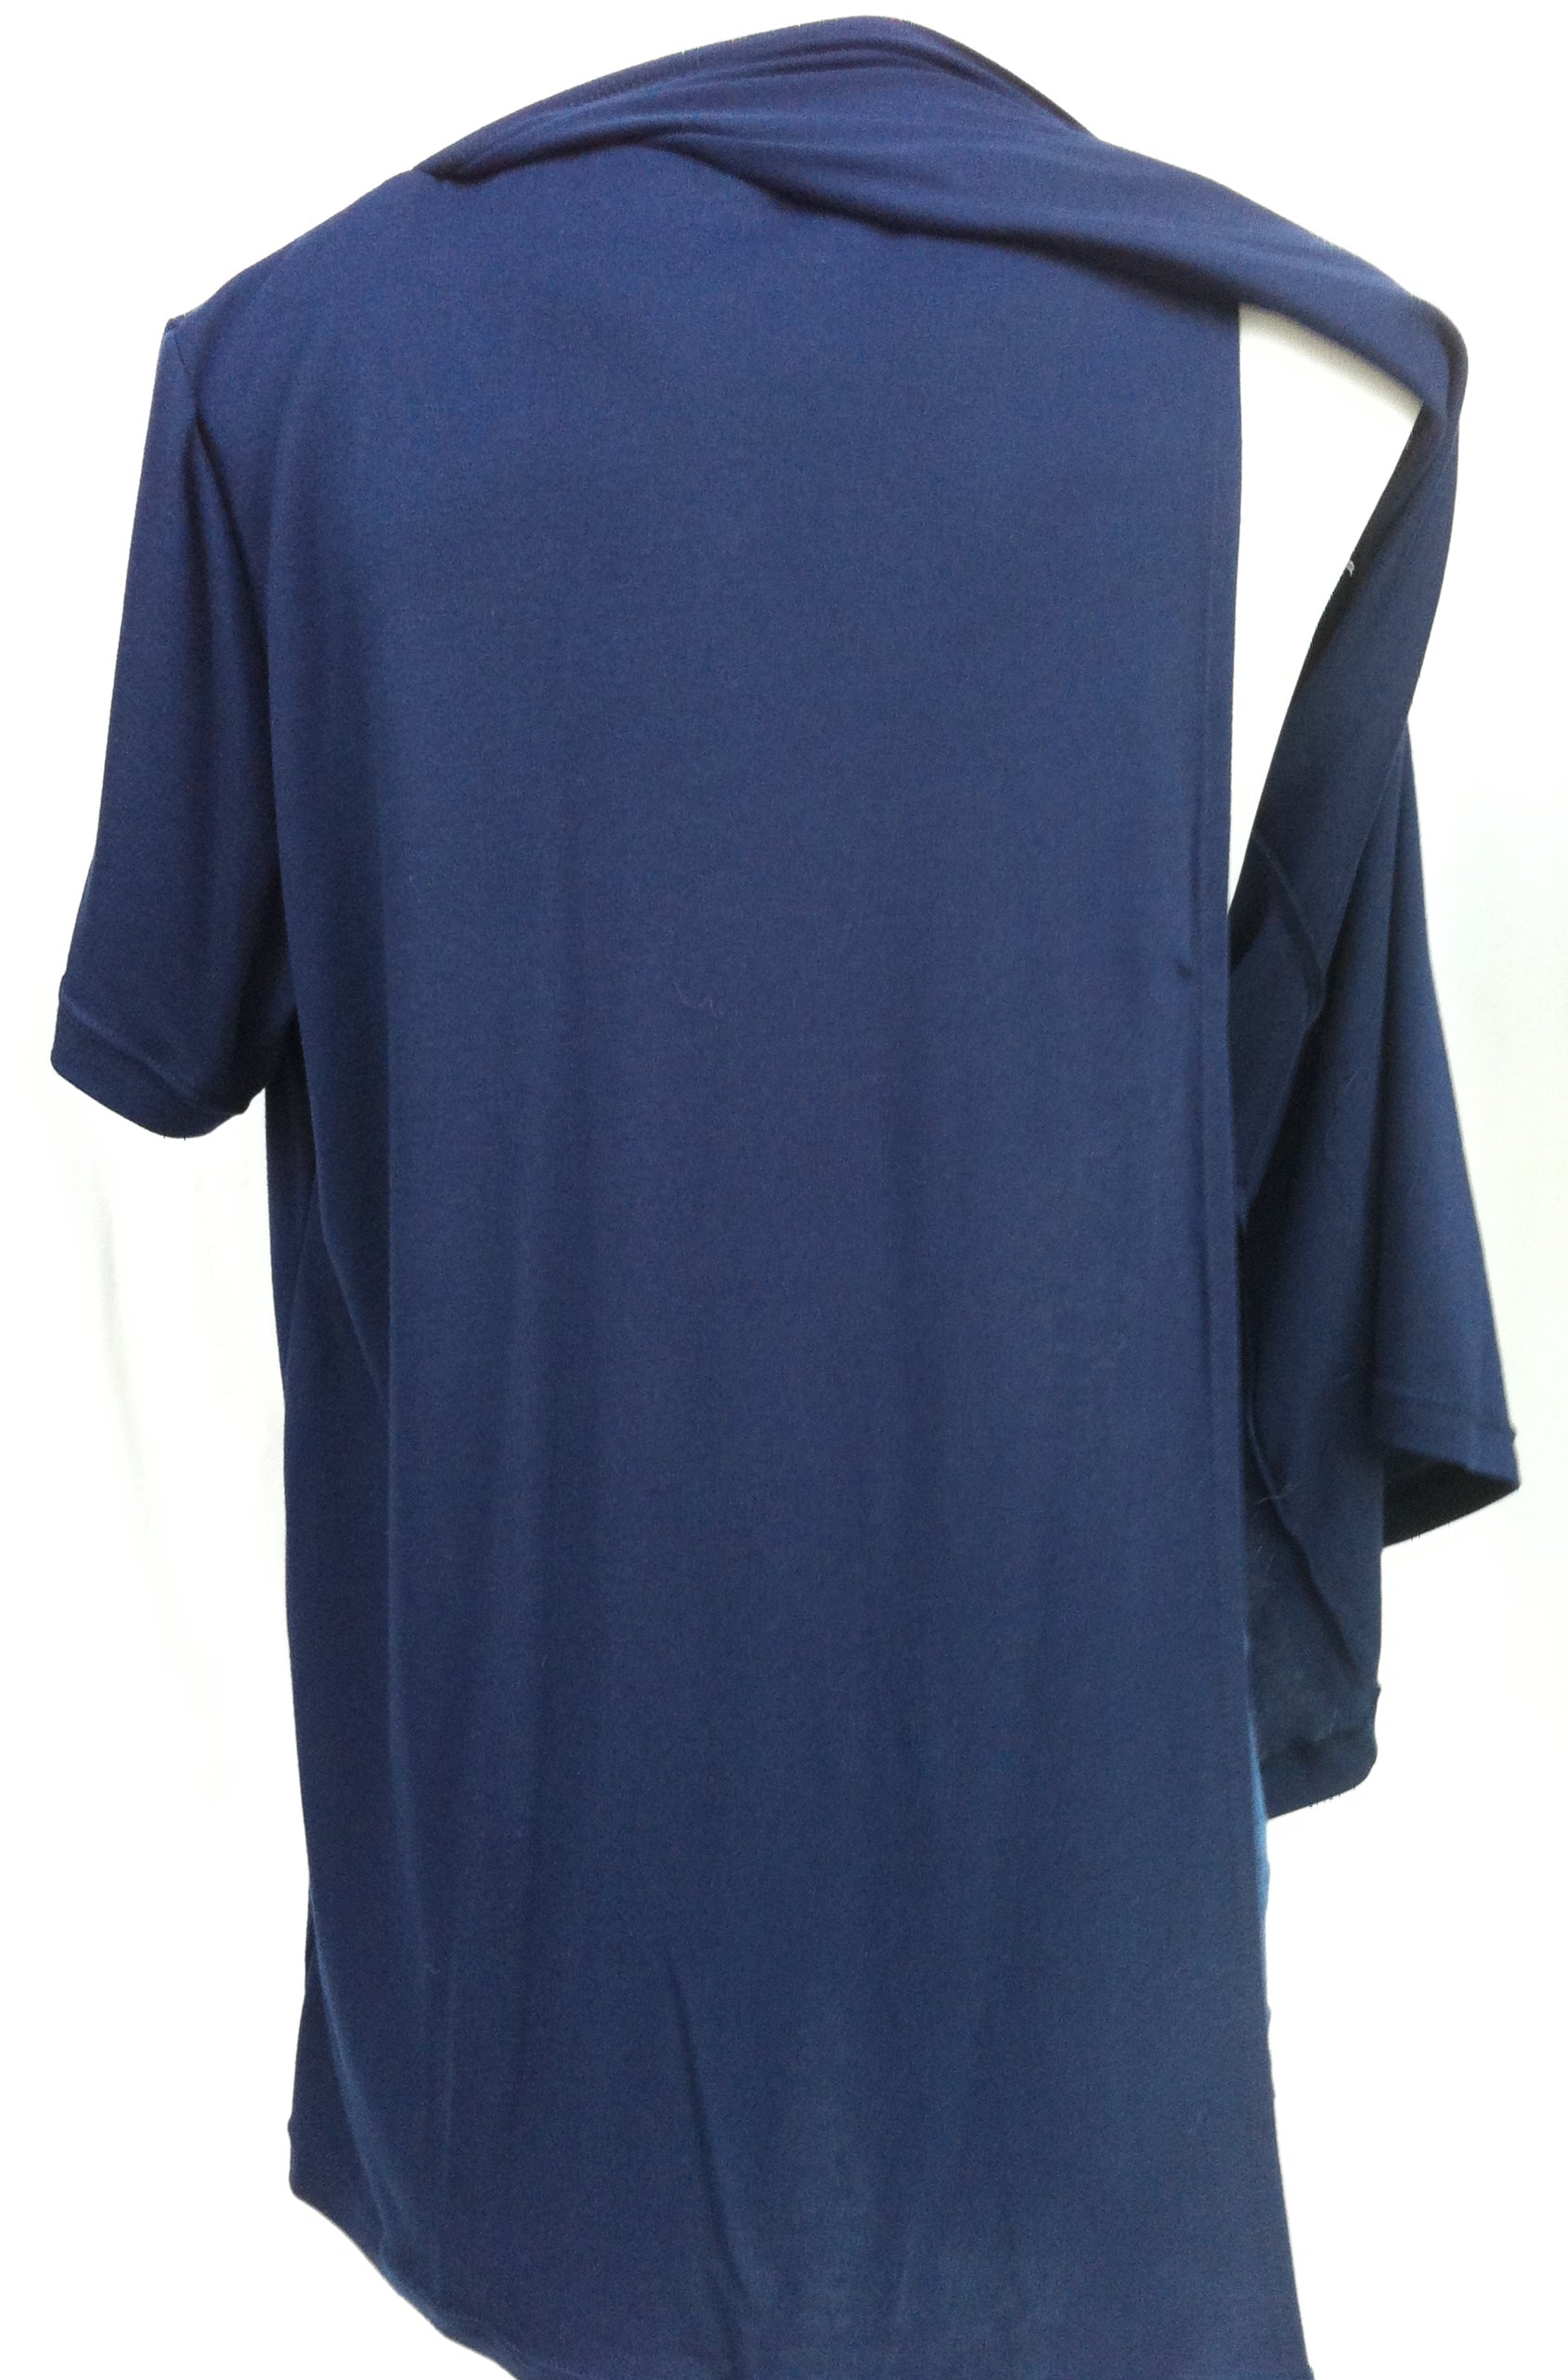 NIGHTSHIRT - Long Sleeves - Plain colours - Adaptive Fitz Clothing